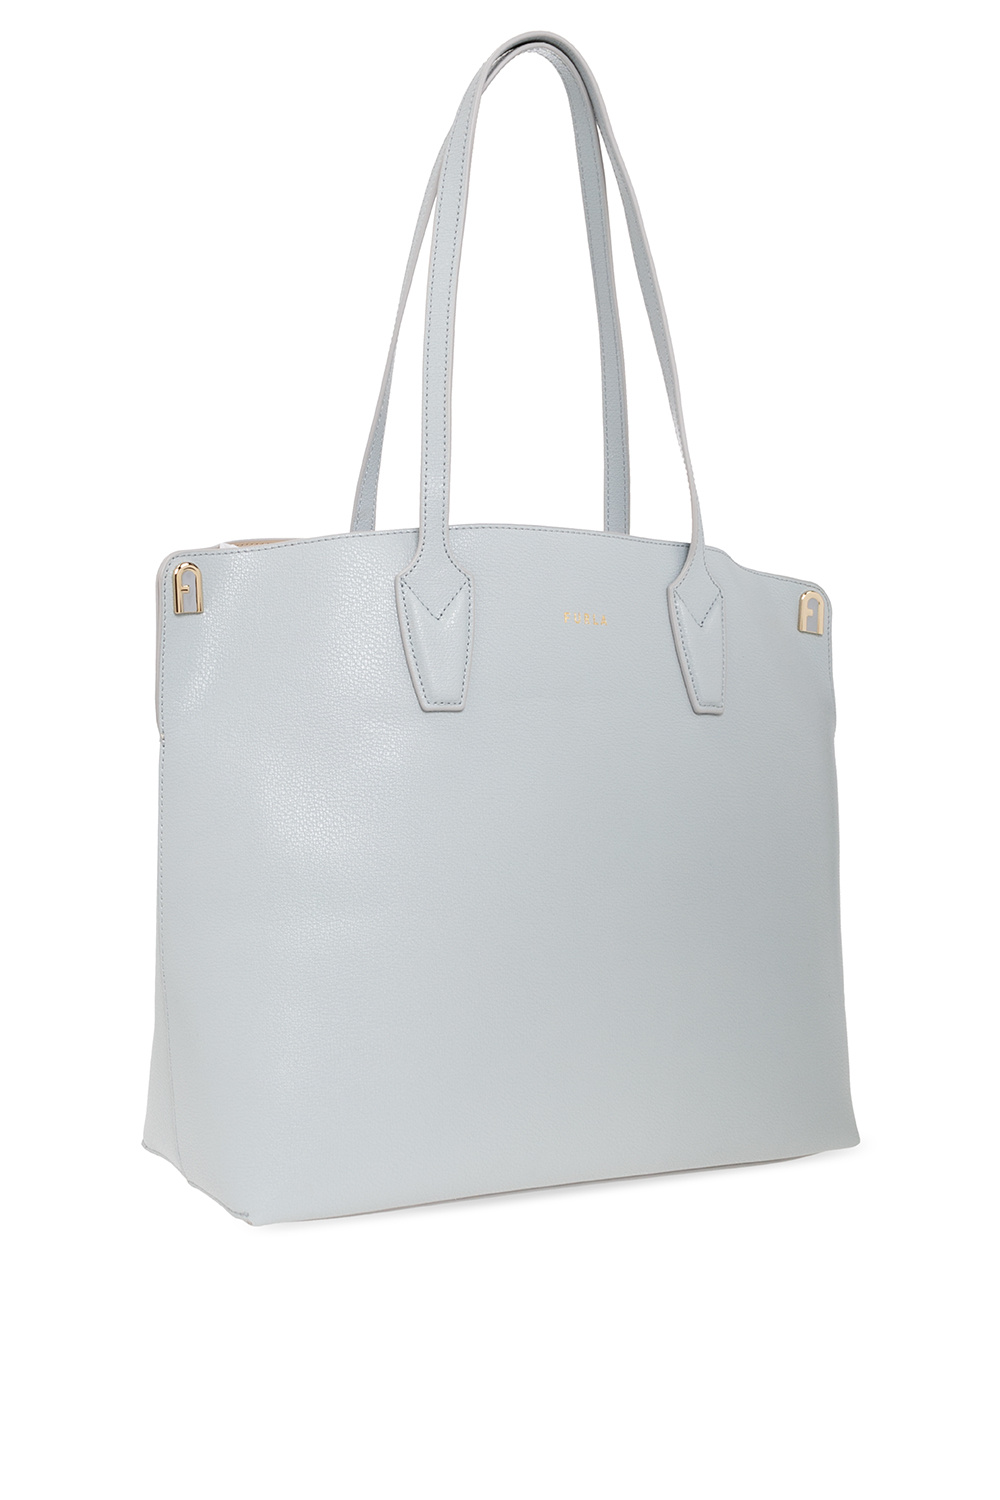 Furla ‘Paradiso Large’ shopper bag